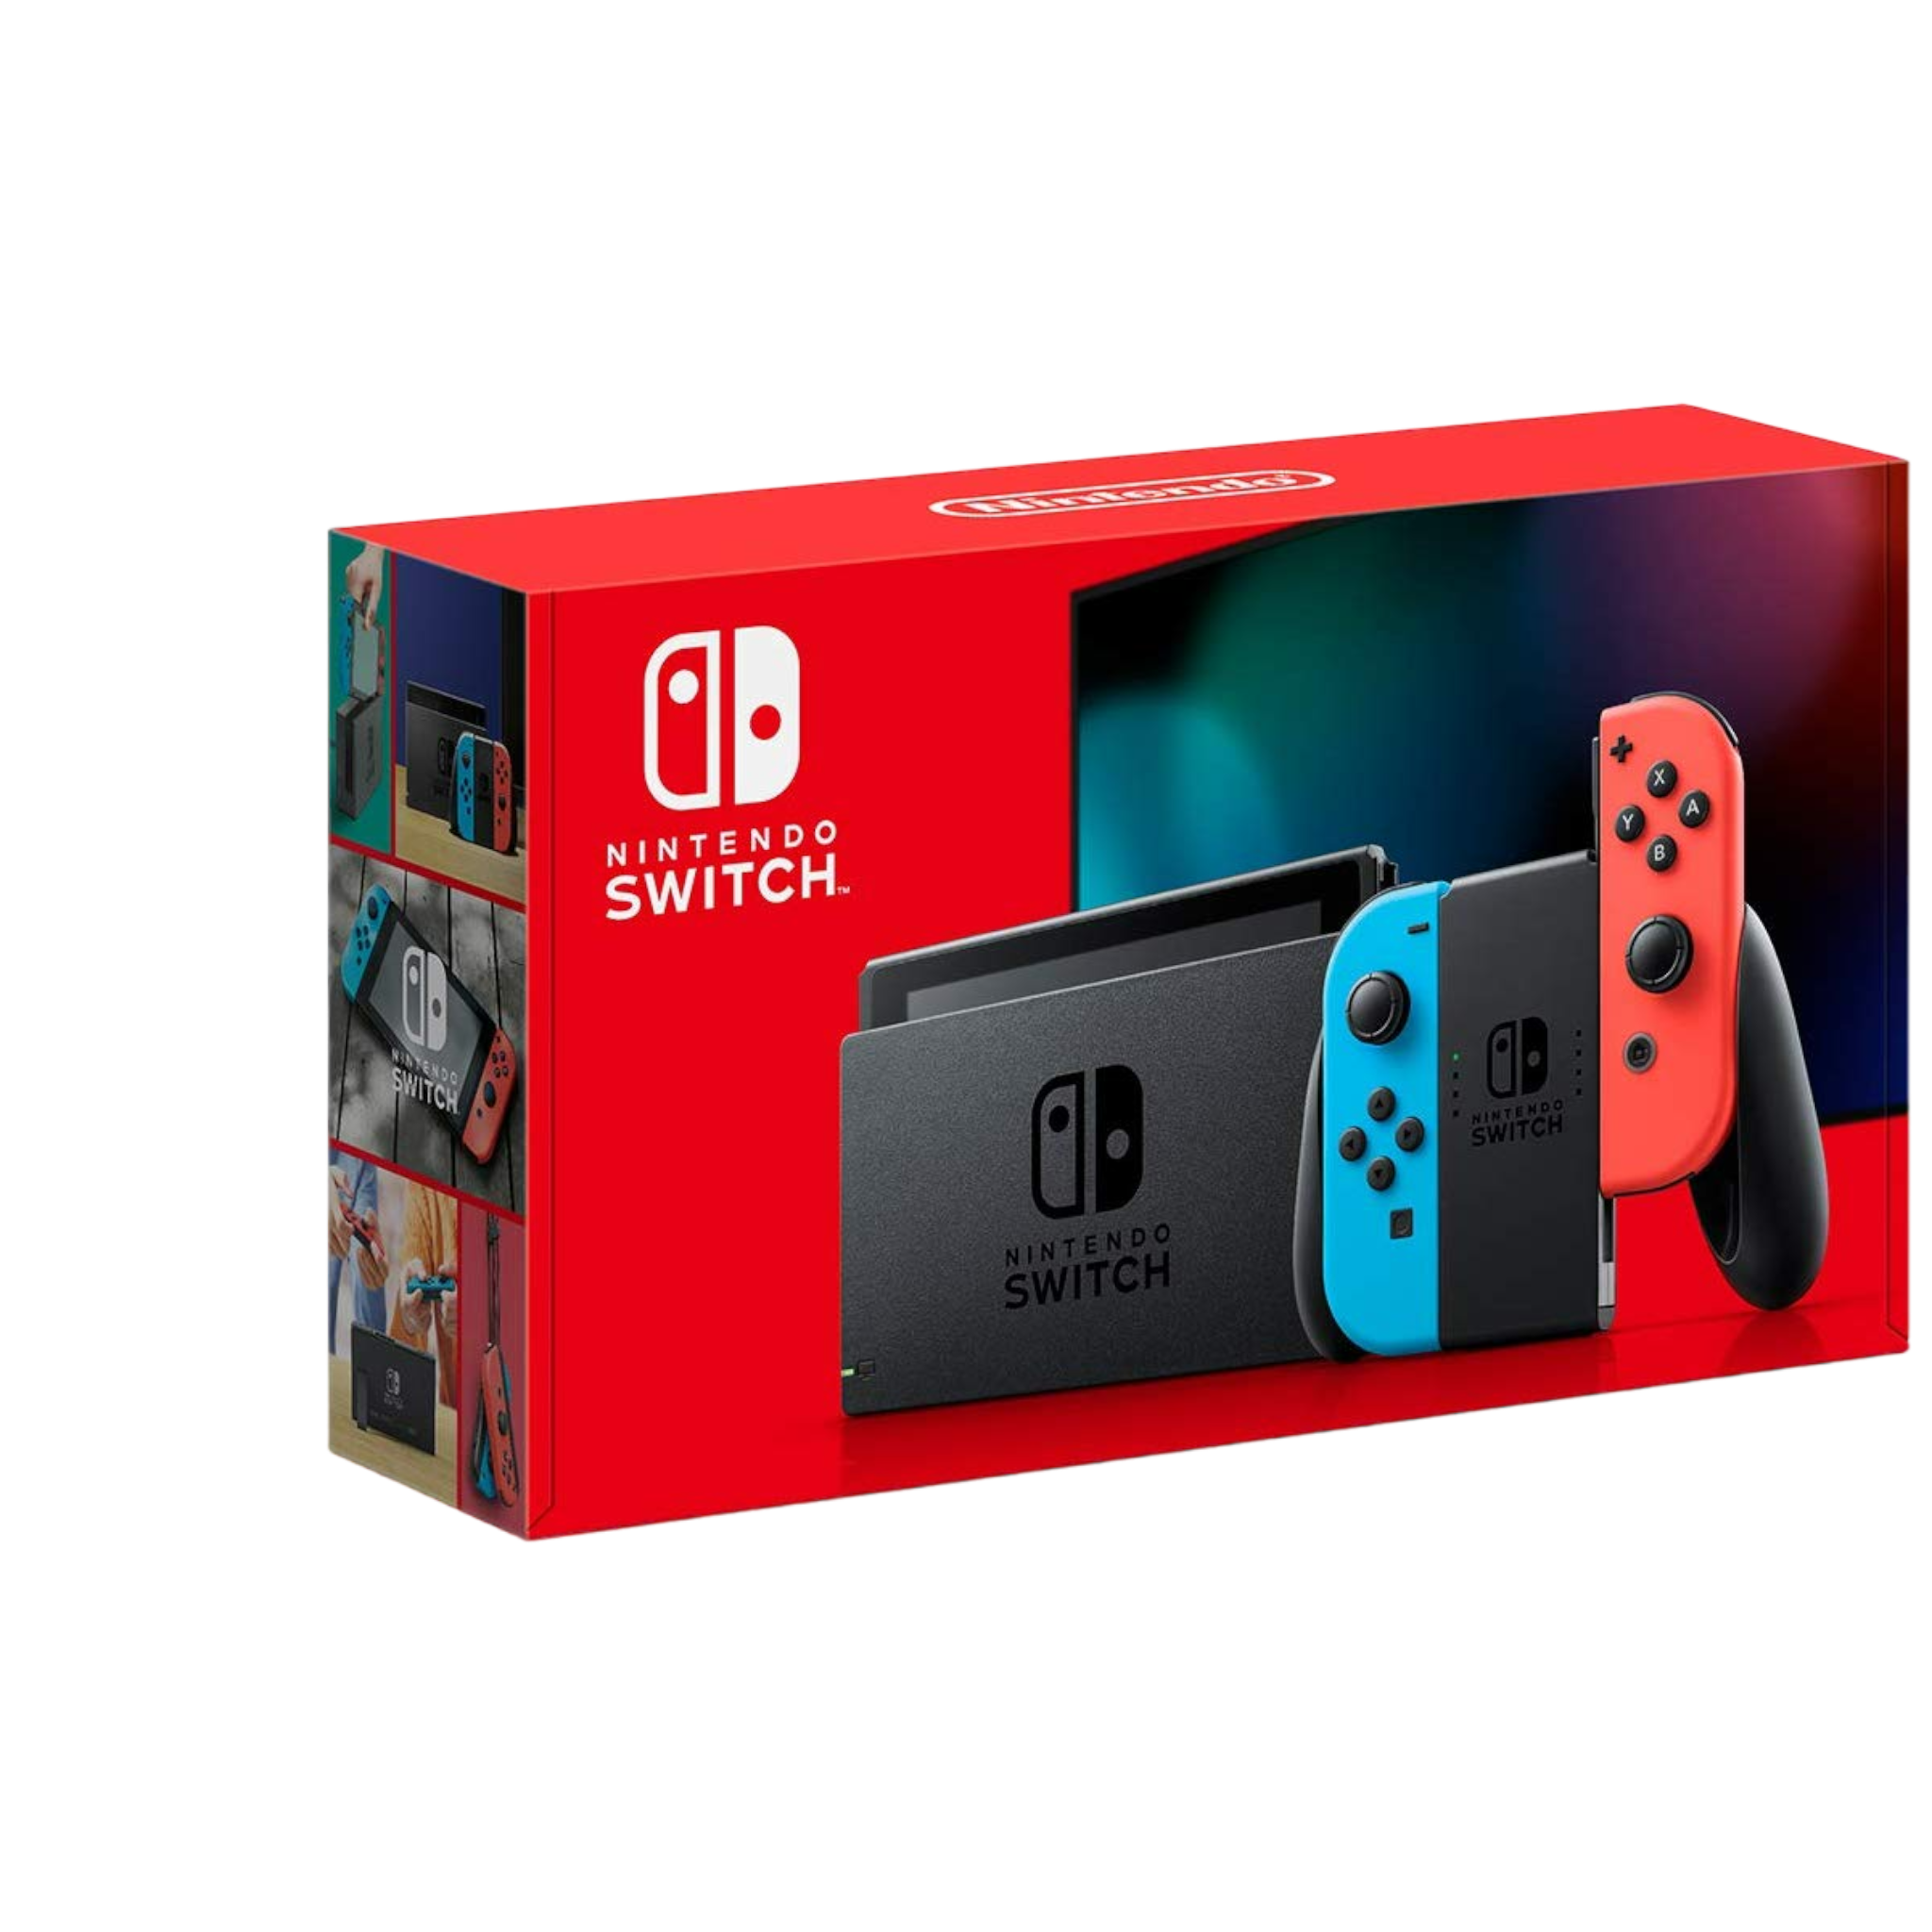 Nintendo Switch 32GB Console - Neon Red/Blue Joy-Con - New Version - Pro-Distributing